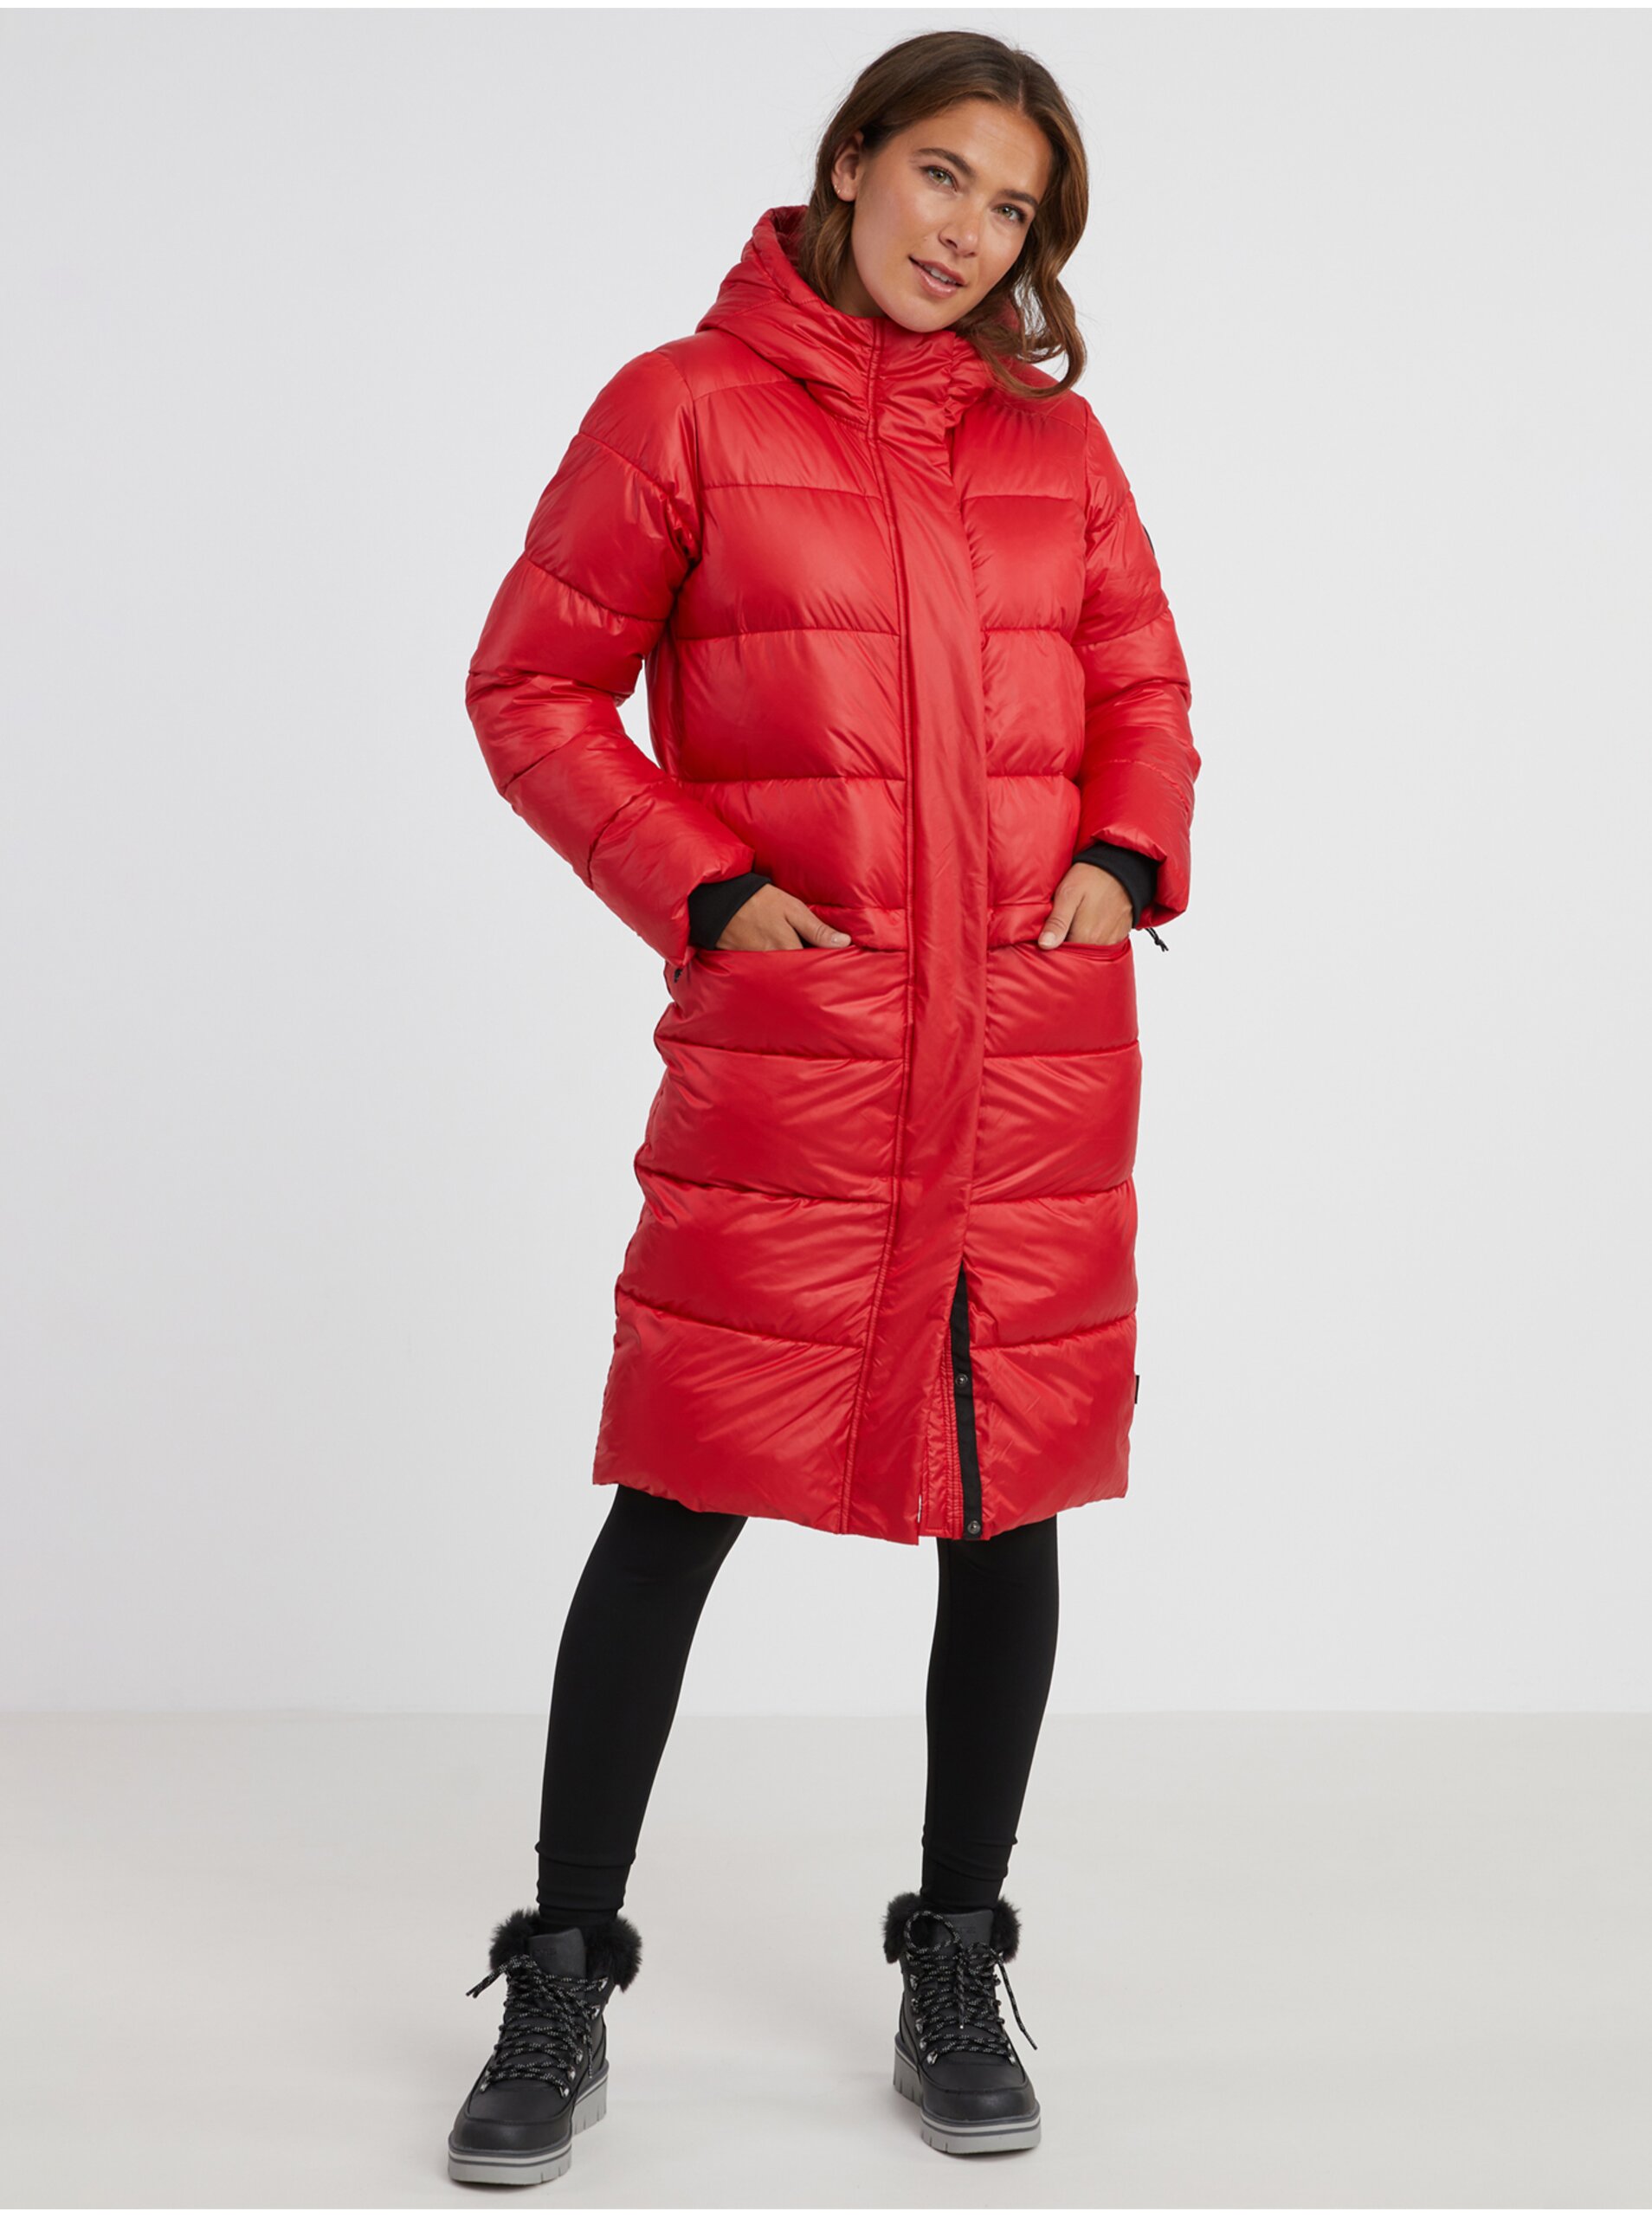 Lacno Červený dámsky zimný prešívaný oversized kabát SAM 73